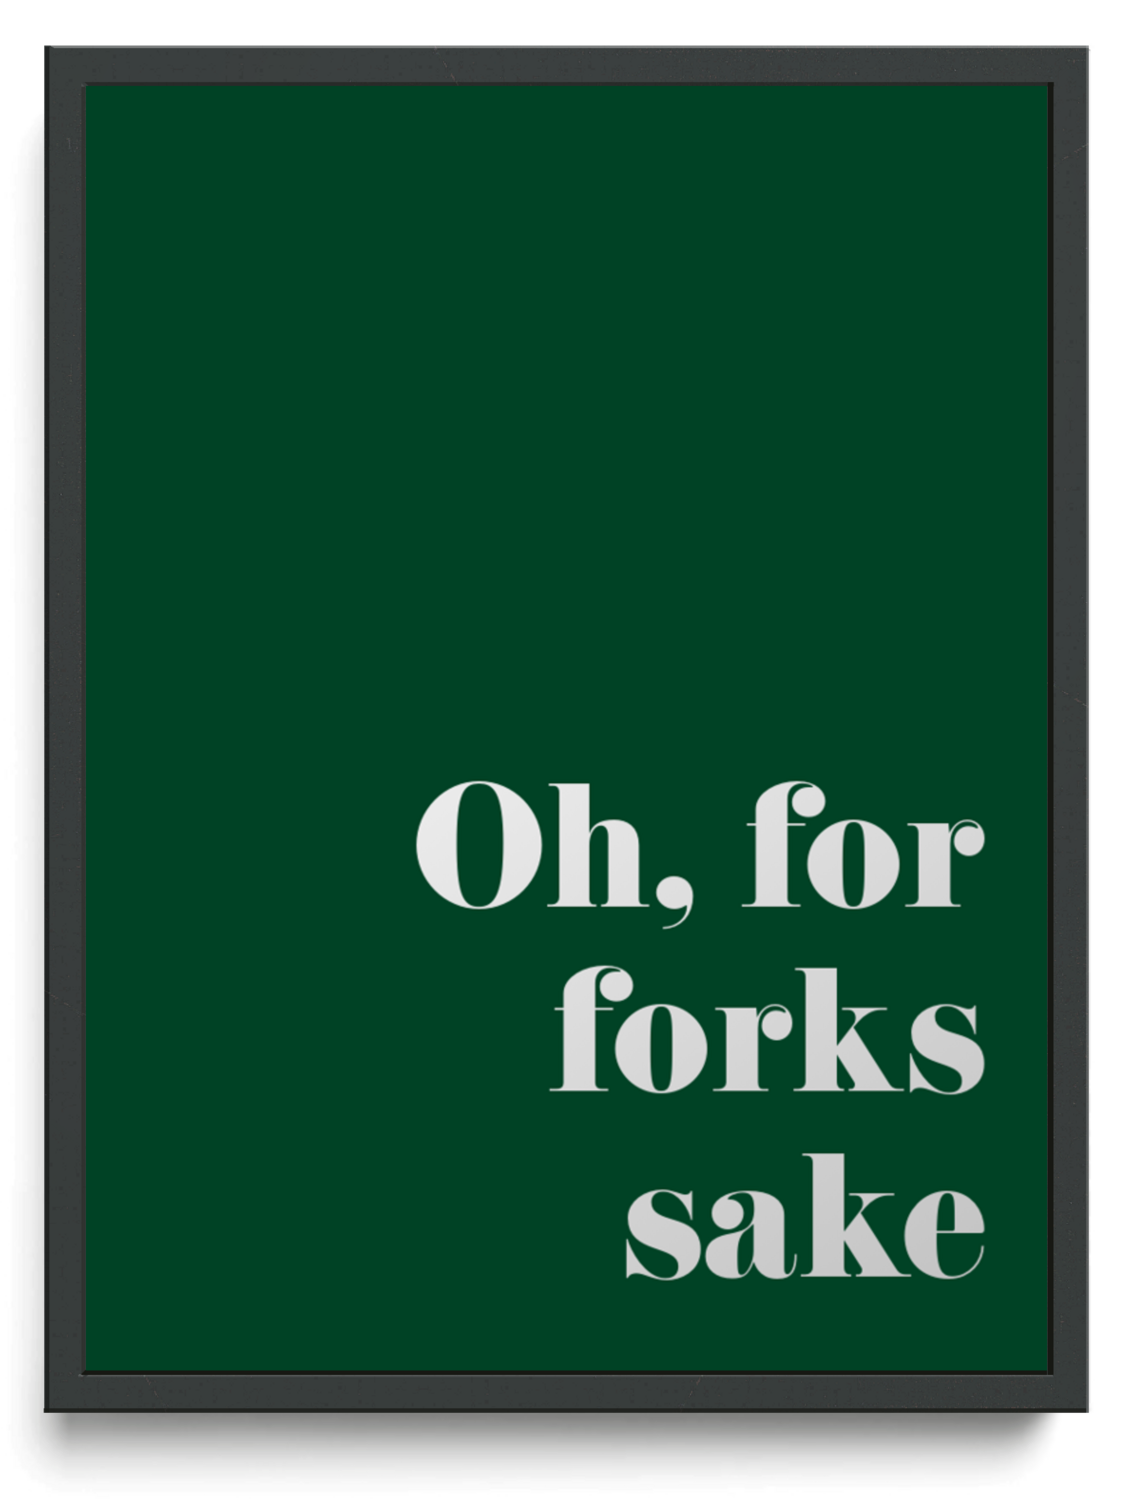 Oh, for forks sake framed typographic print